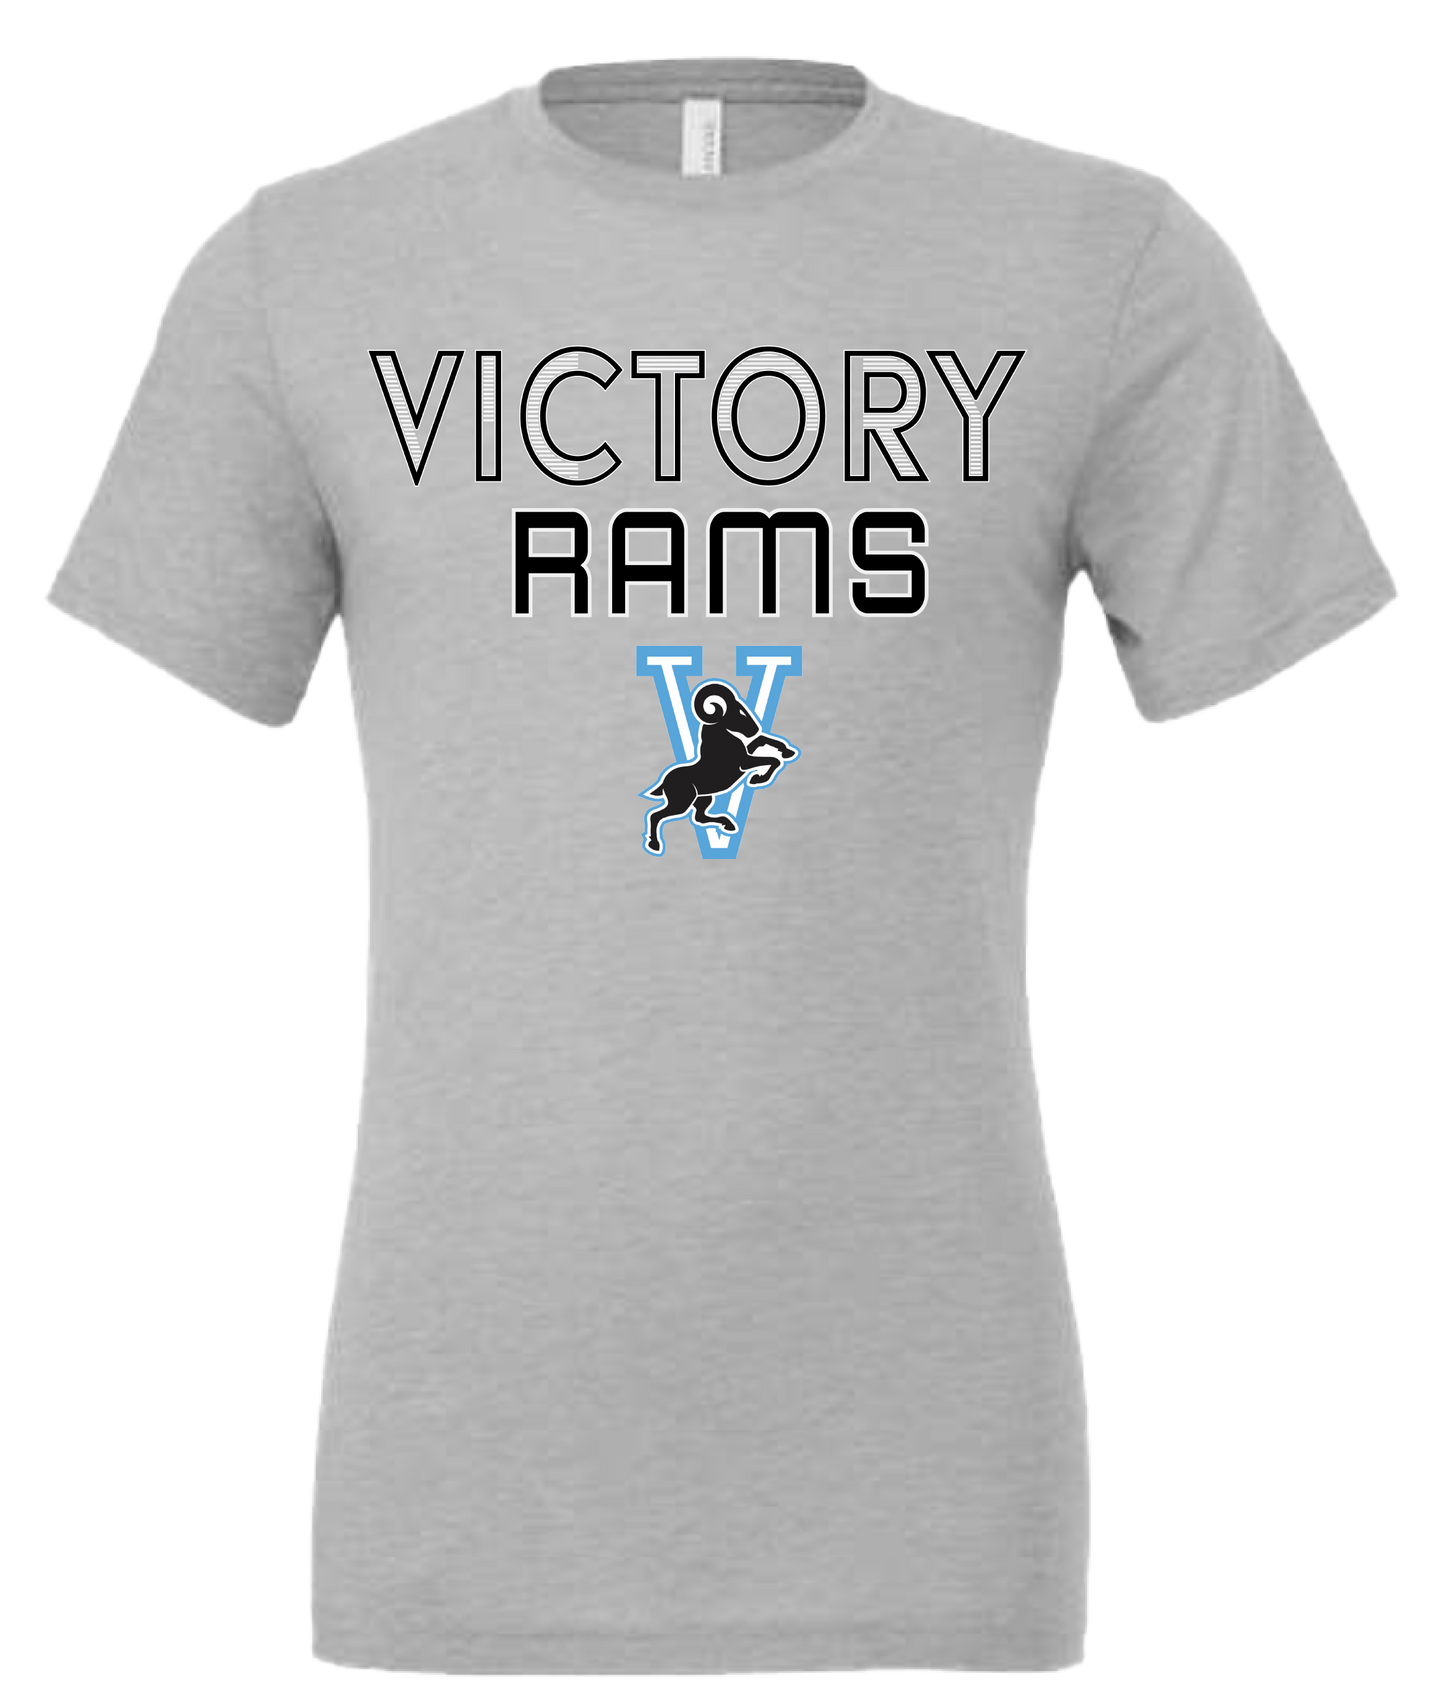 Victory Rams modern logo design t-shirt